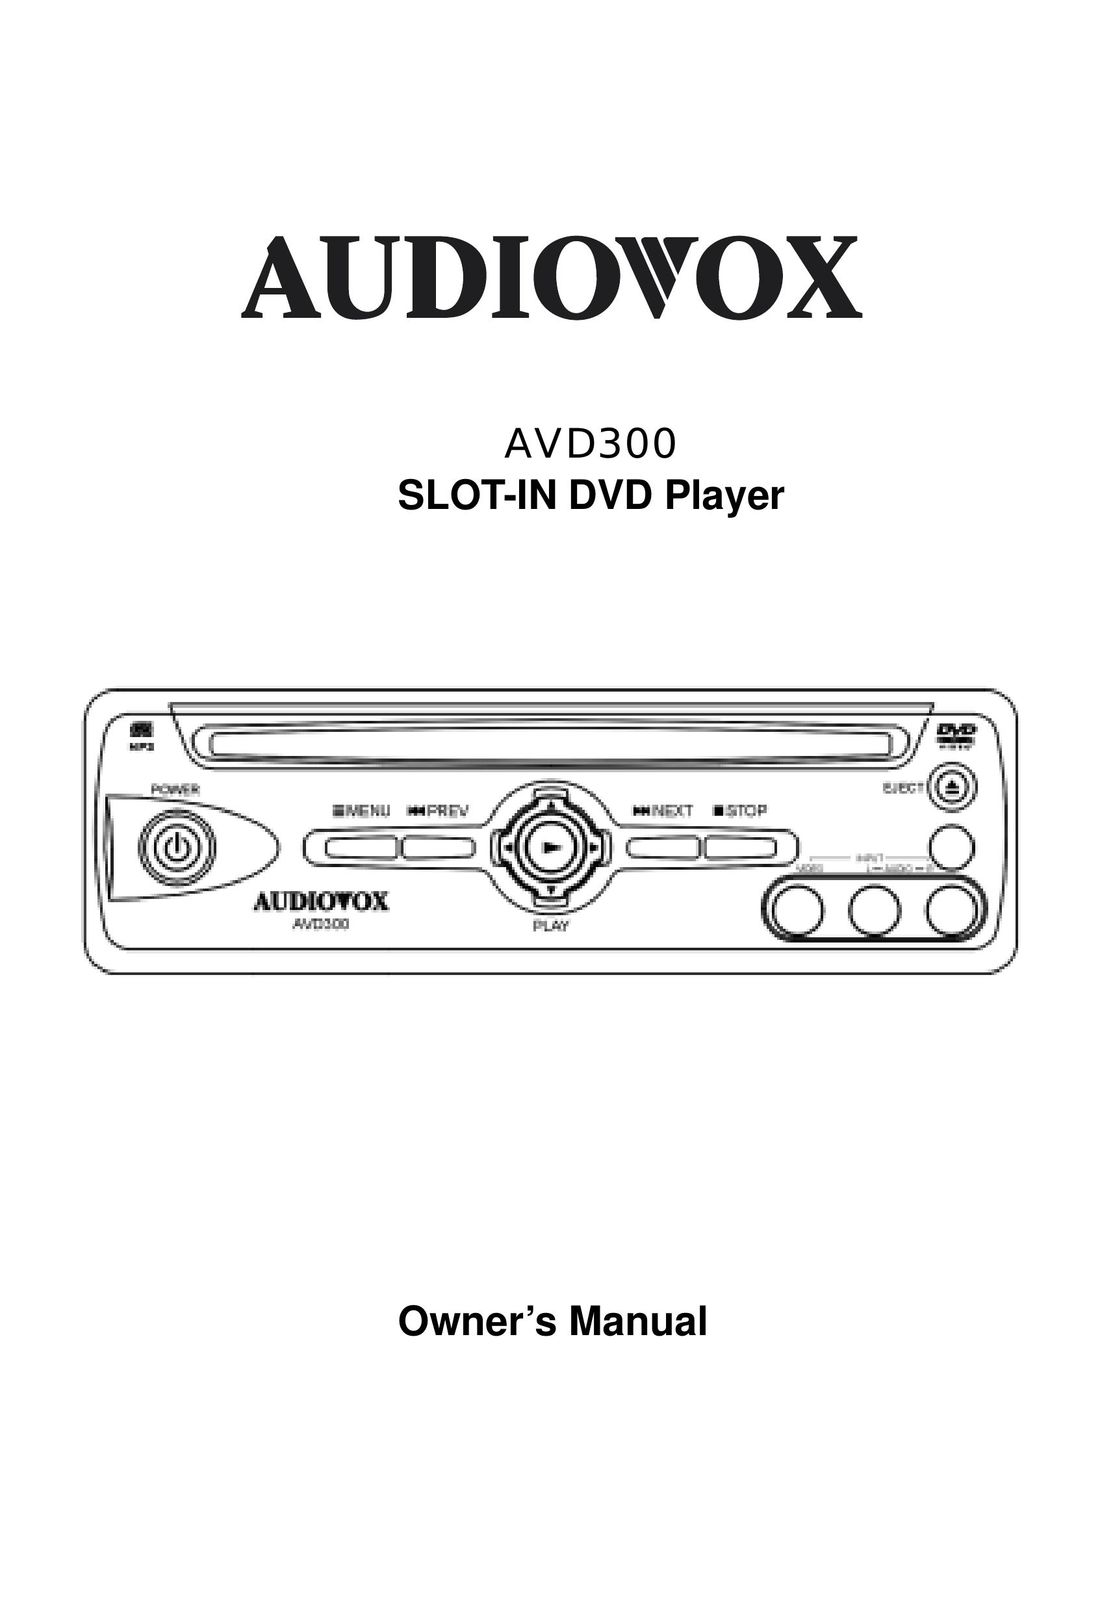 Audiovox AVD300 DVD Player User Manual